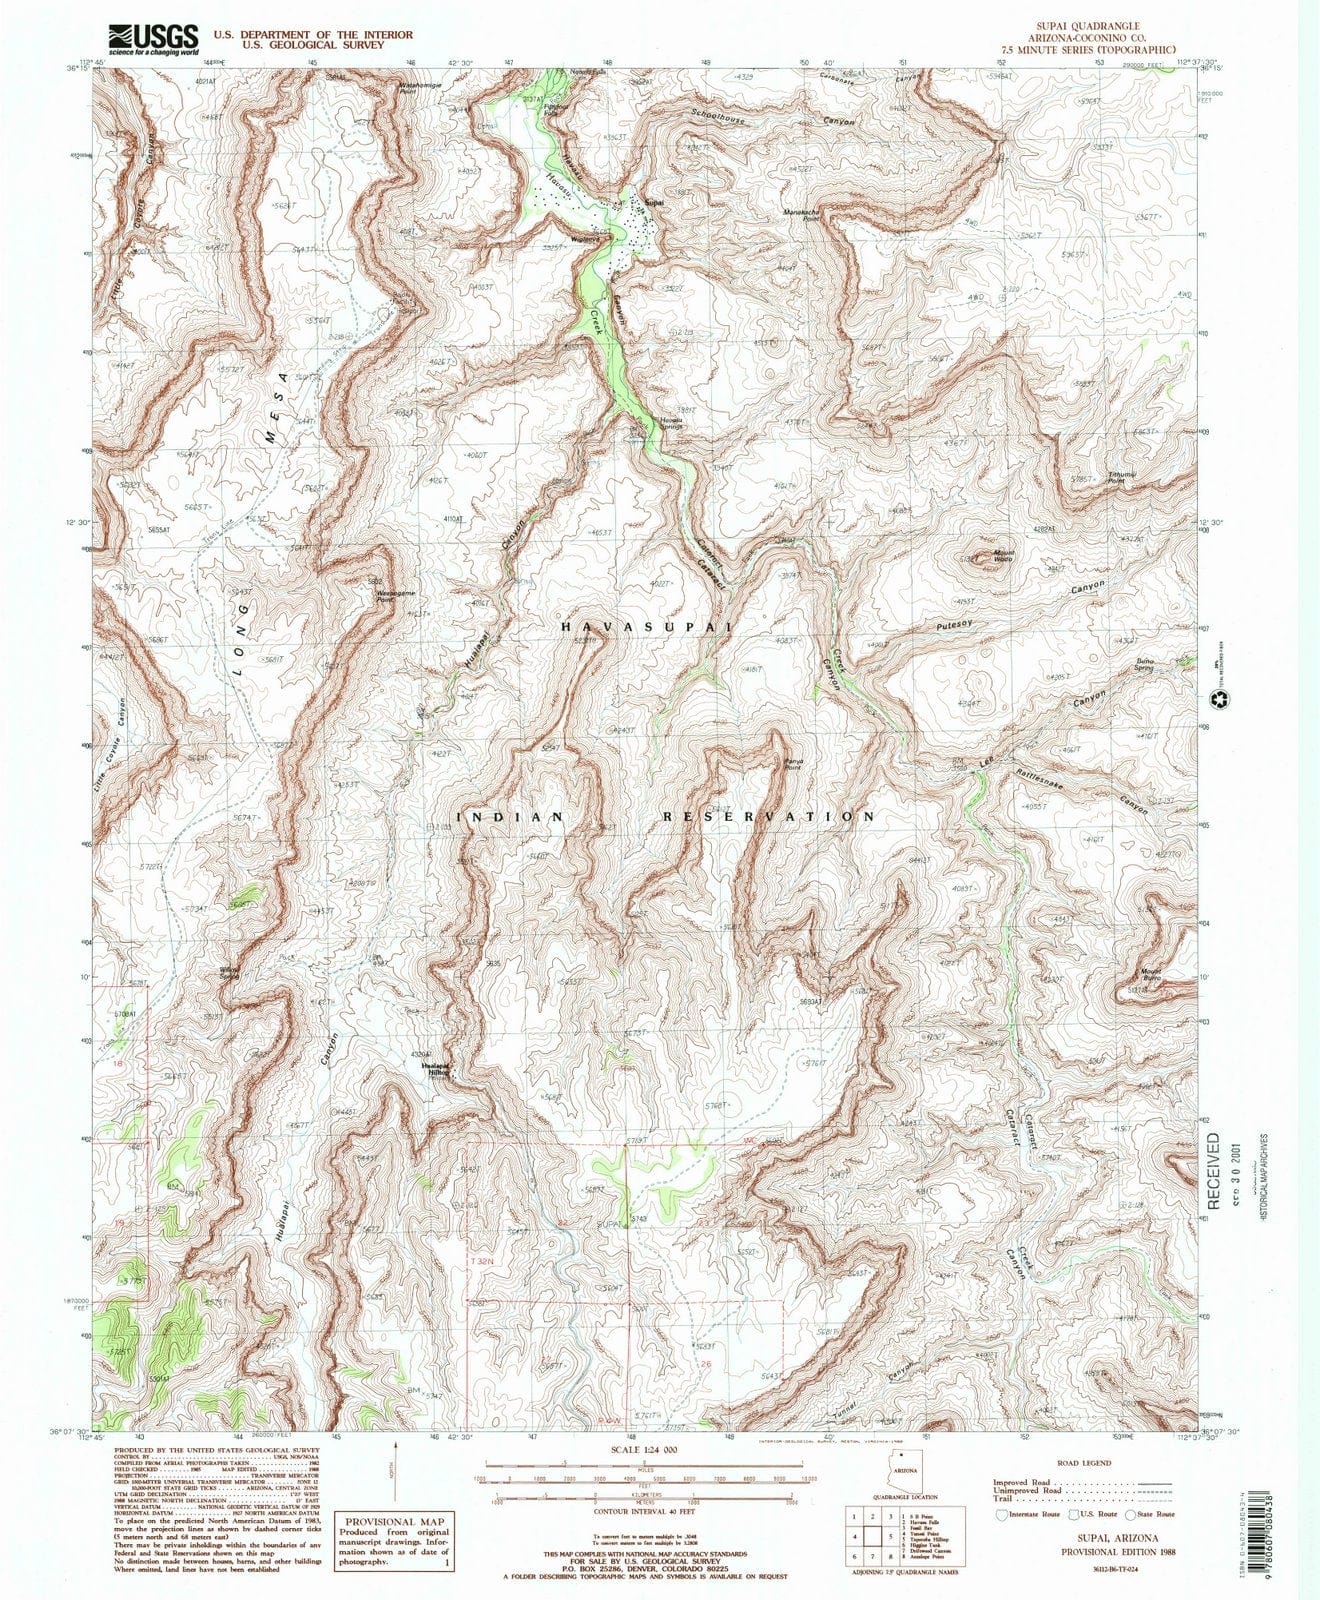 1988 Supai, AZ - Arizona - USGS Topographic Map